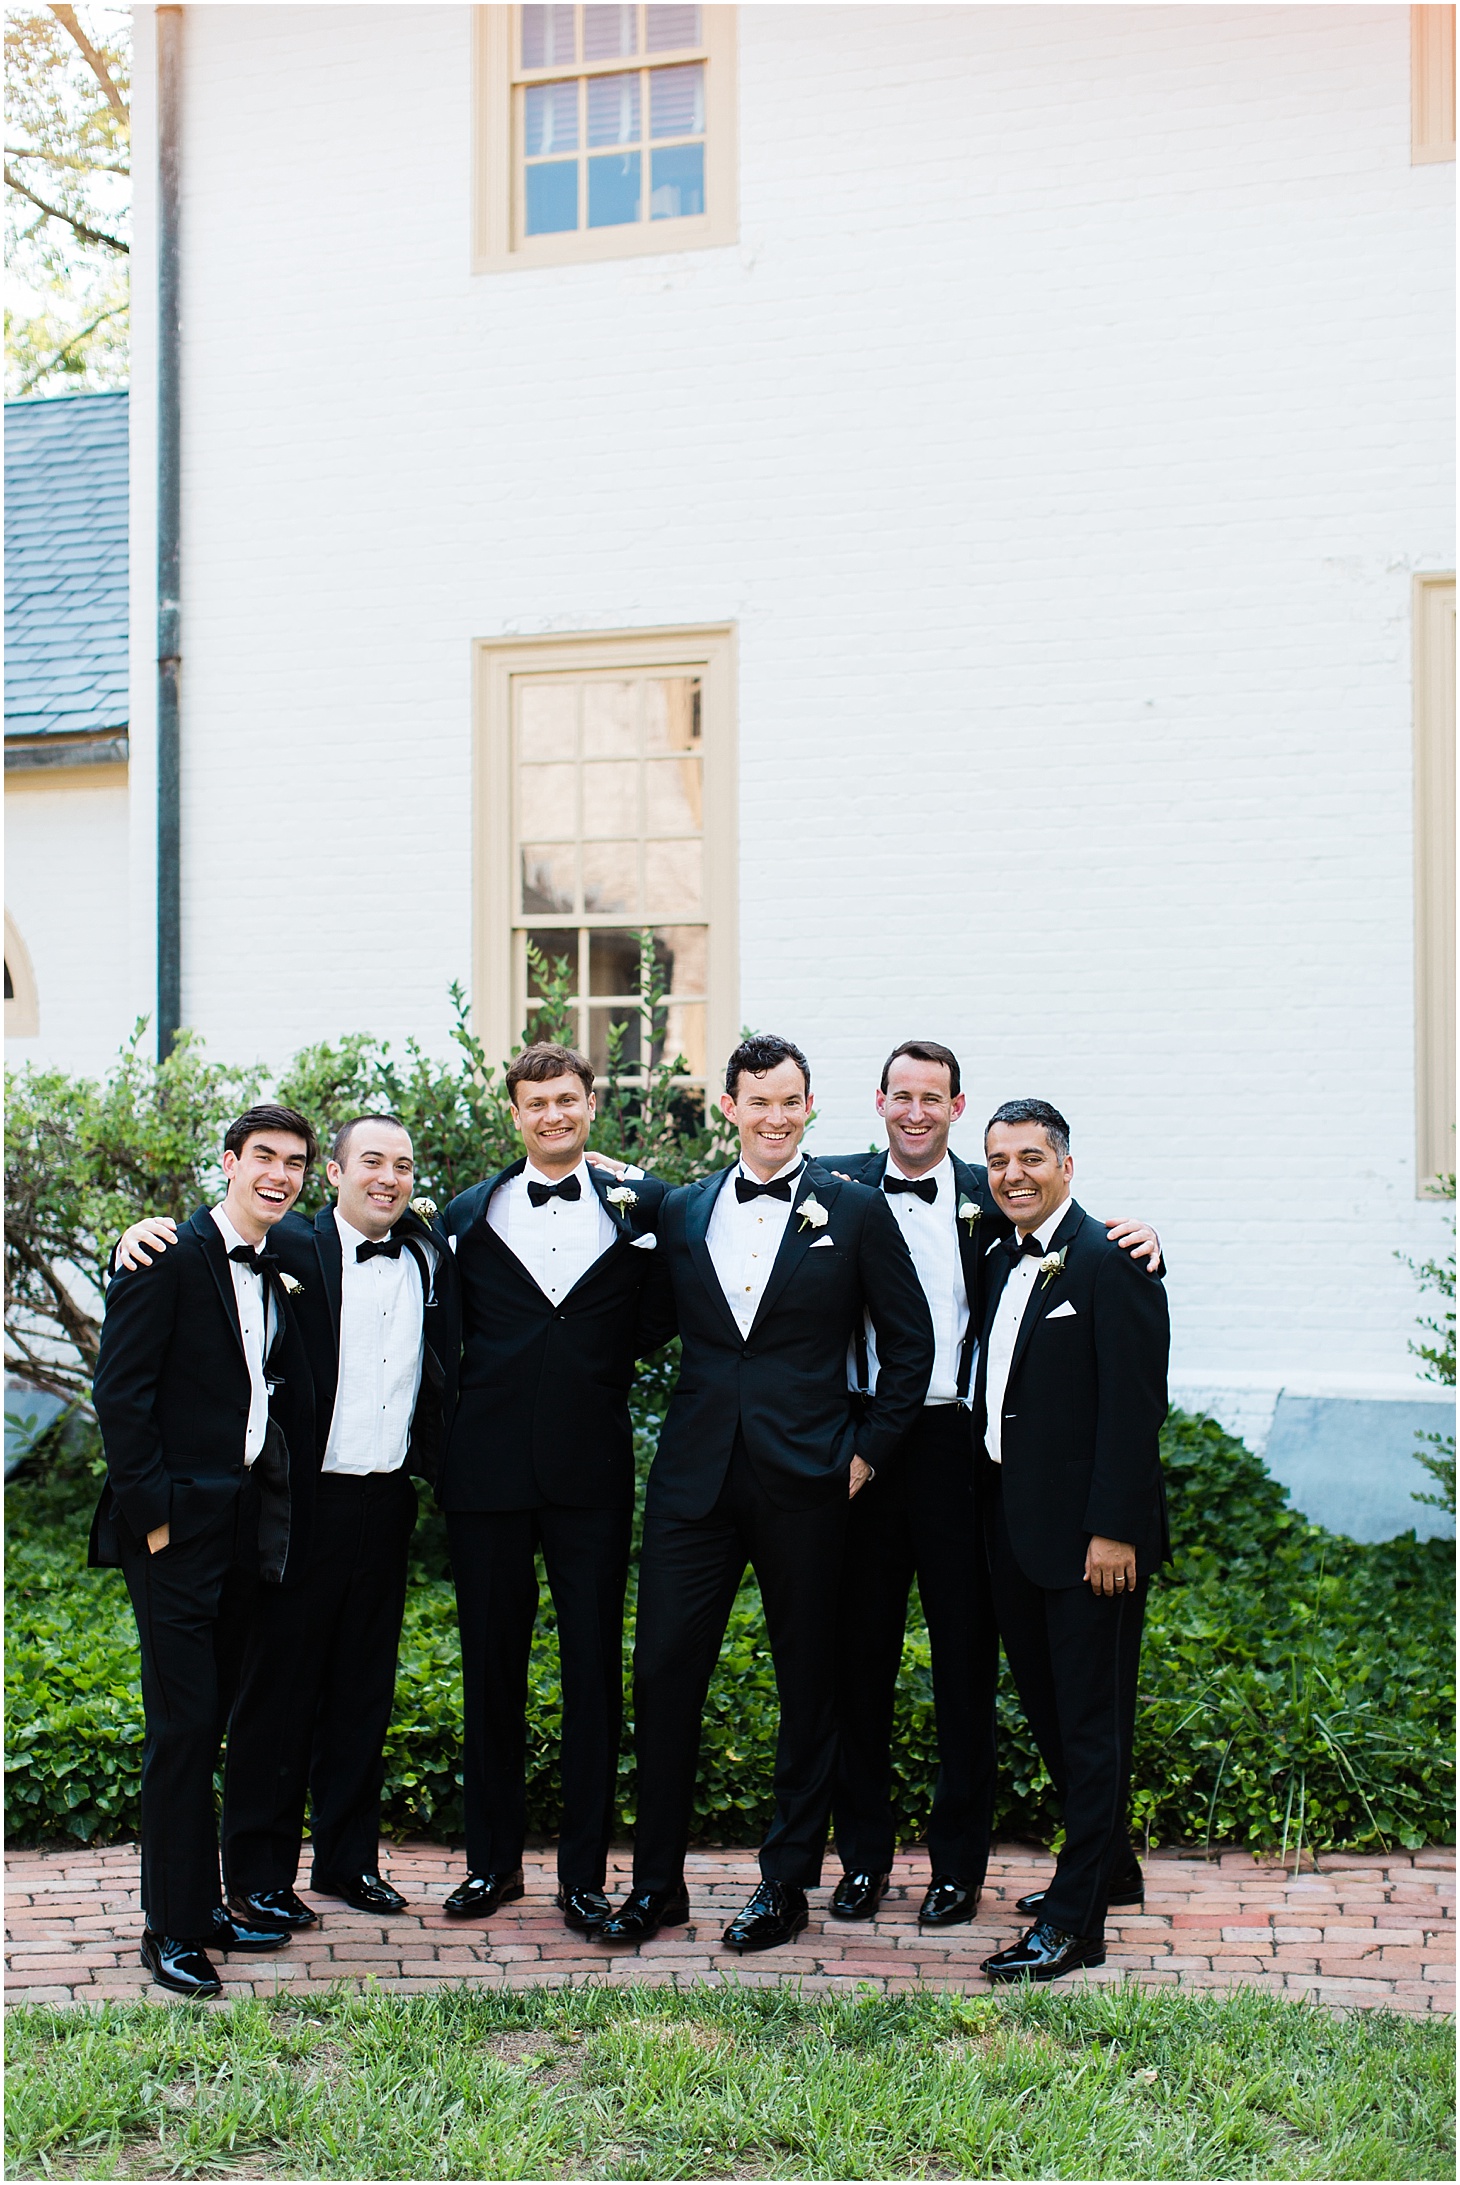 Groom and Groomsmen at the Williamsburg Inn | Wedding Ceremony at St. Olaf Catholic Church | Blush and Black Tie Wedding in Williamsburg, VA | Sarah Bradshaw Photography